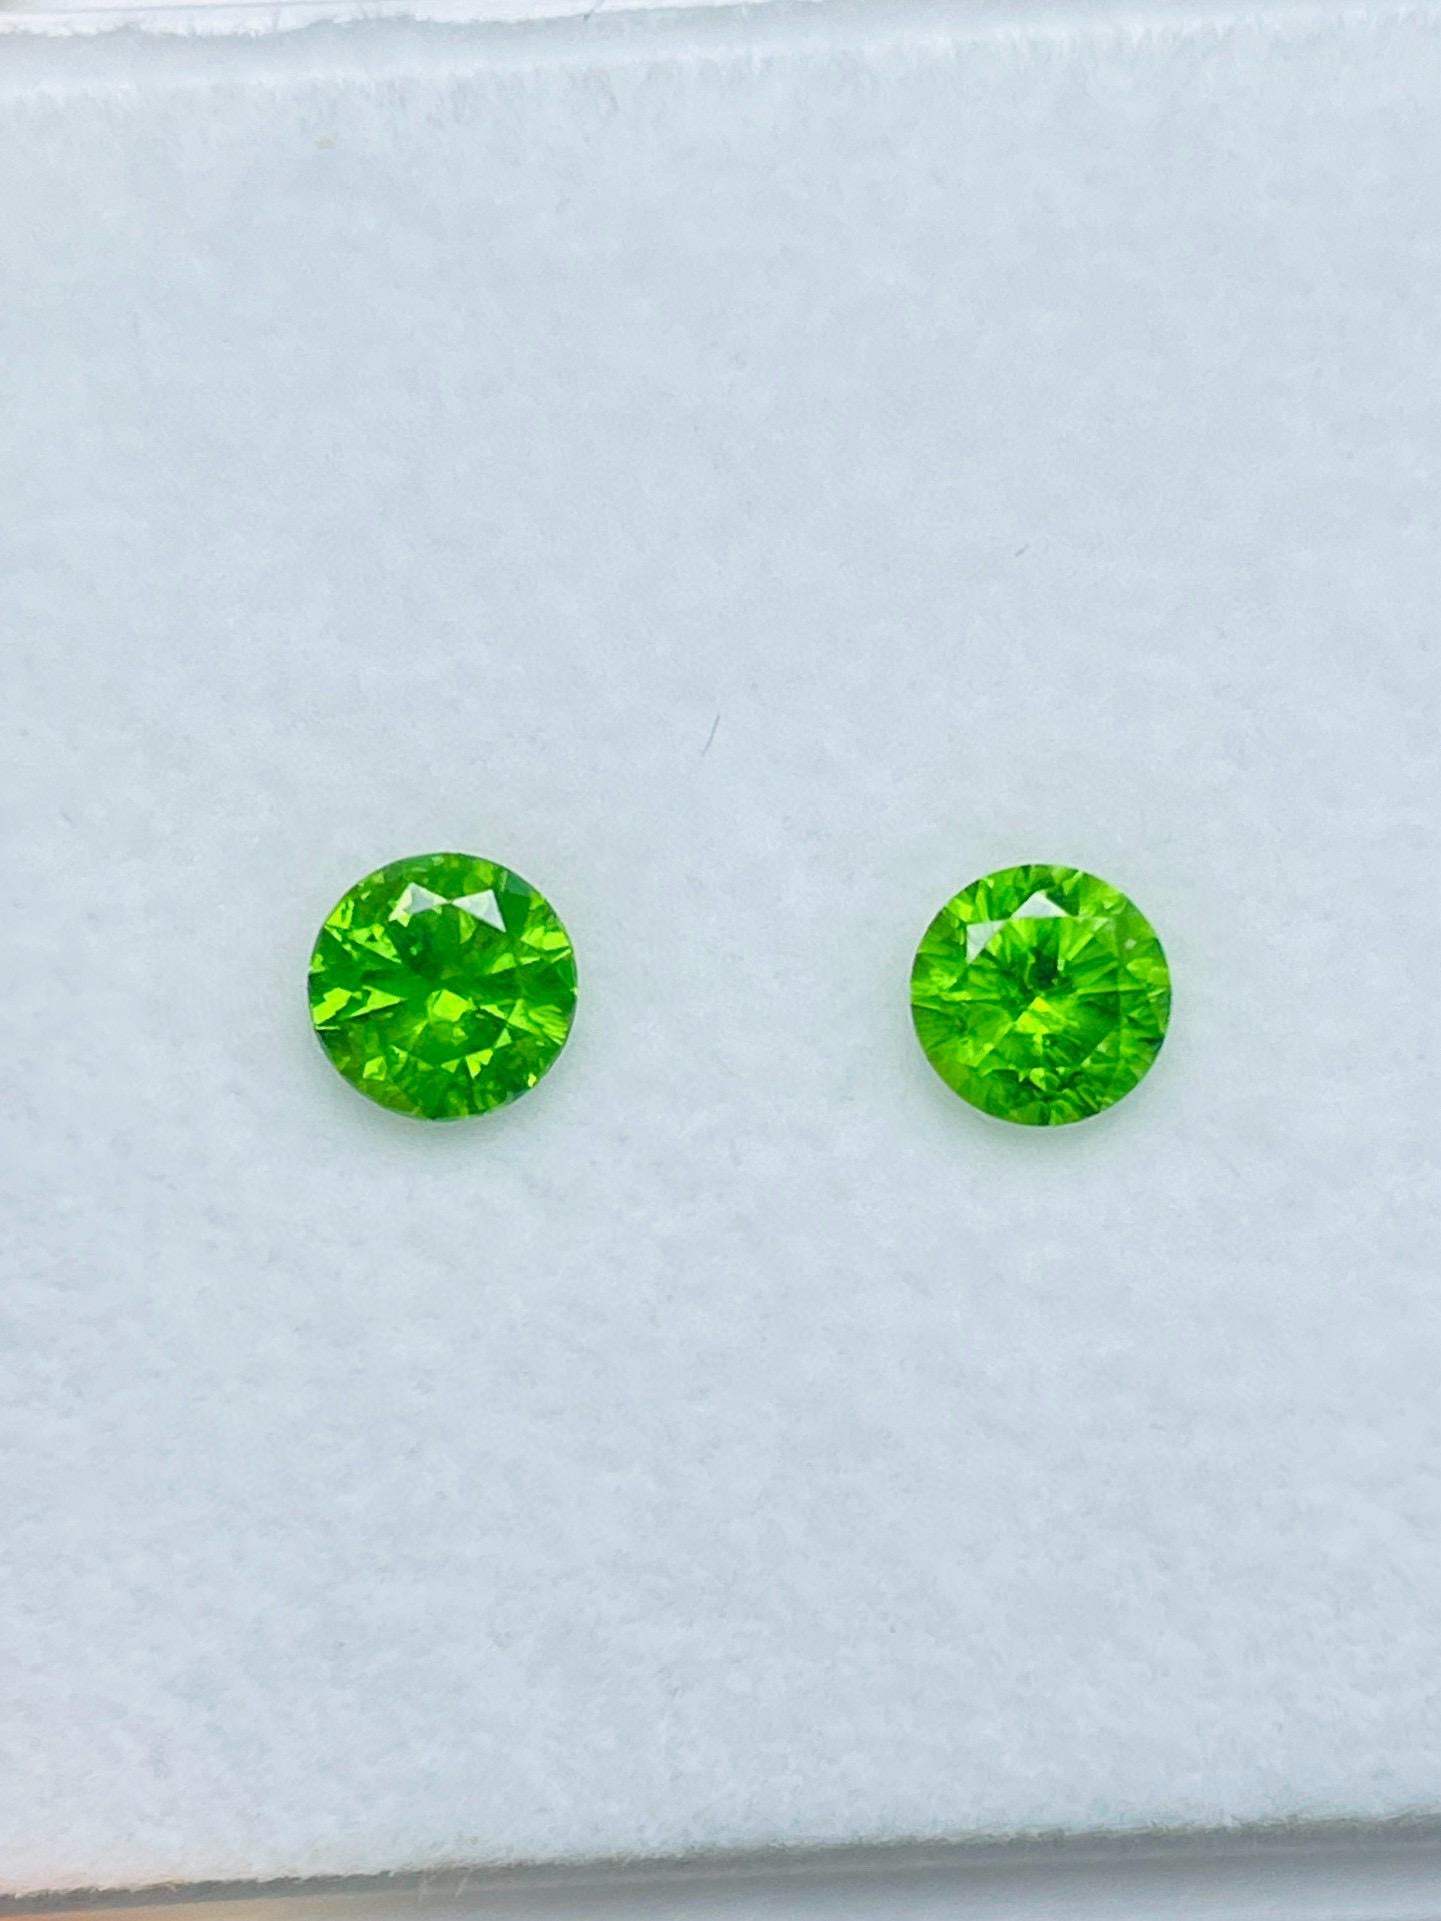 Russia demantoid Green garnet 

DRC01
Weight: 1.04 carats/pair
Size : 5mm
Color :green
Original : Russia
Clarity : Clean Clarity